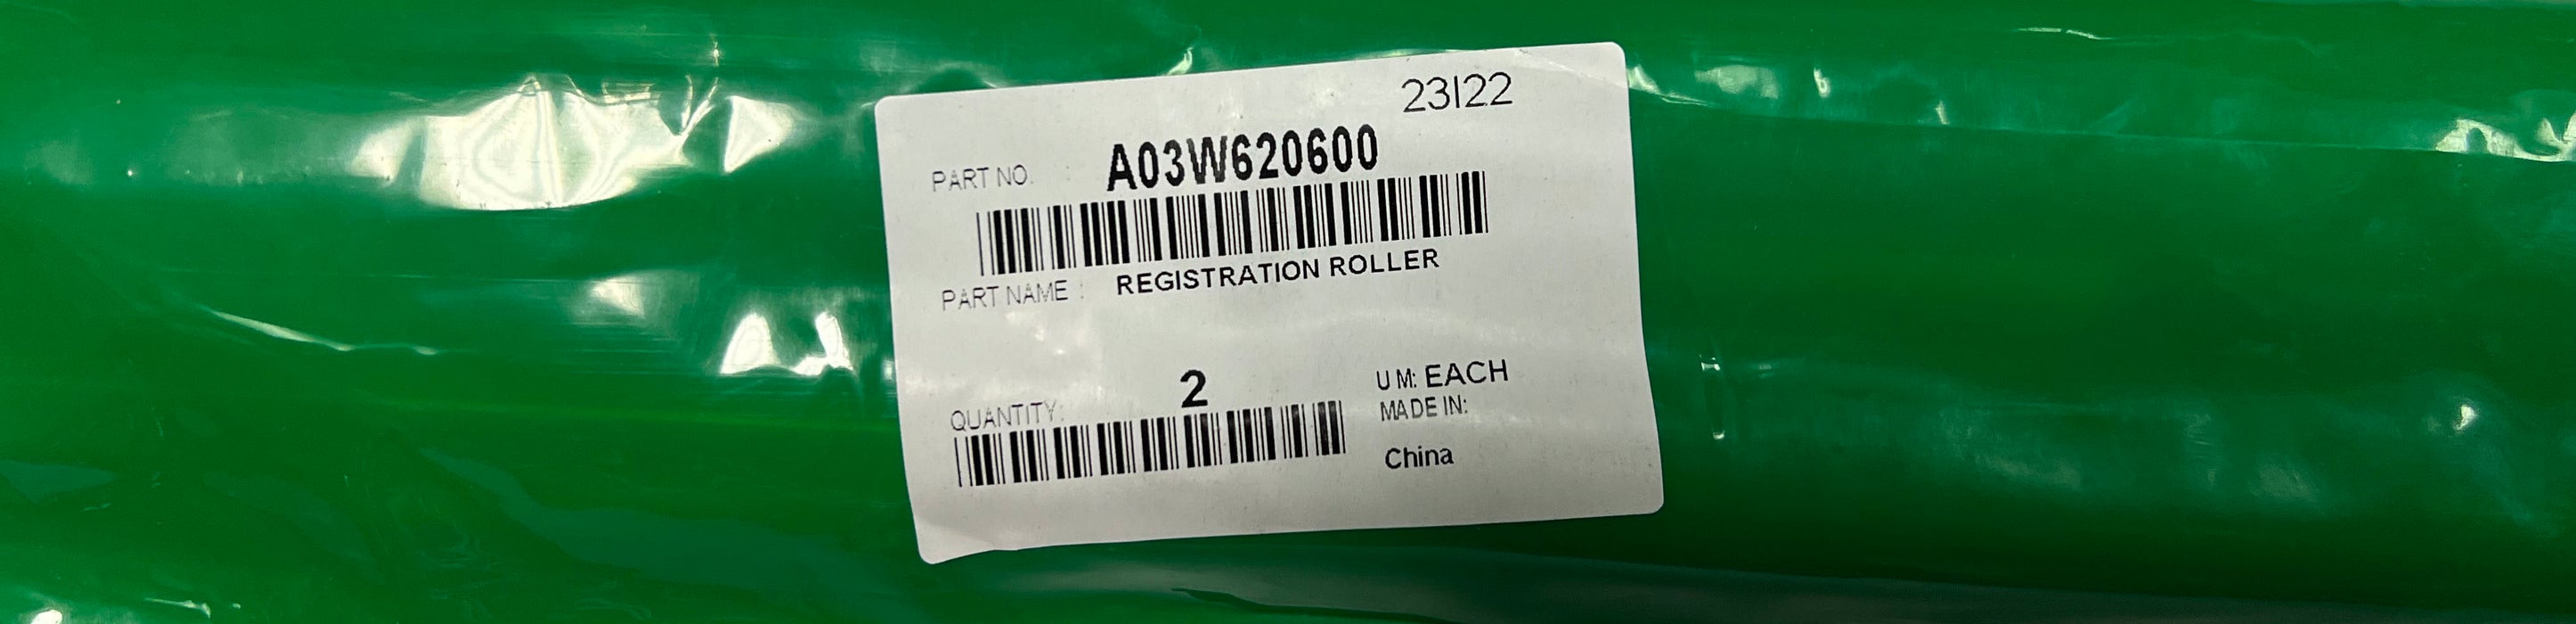 Konica Minolta Registration Roller | A03W620600